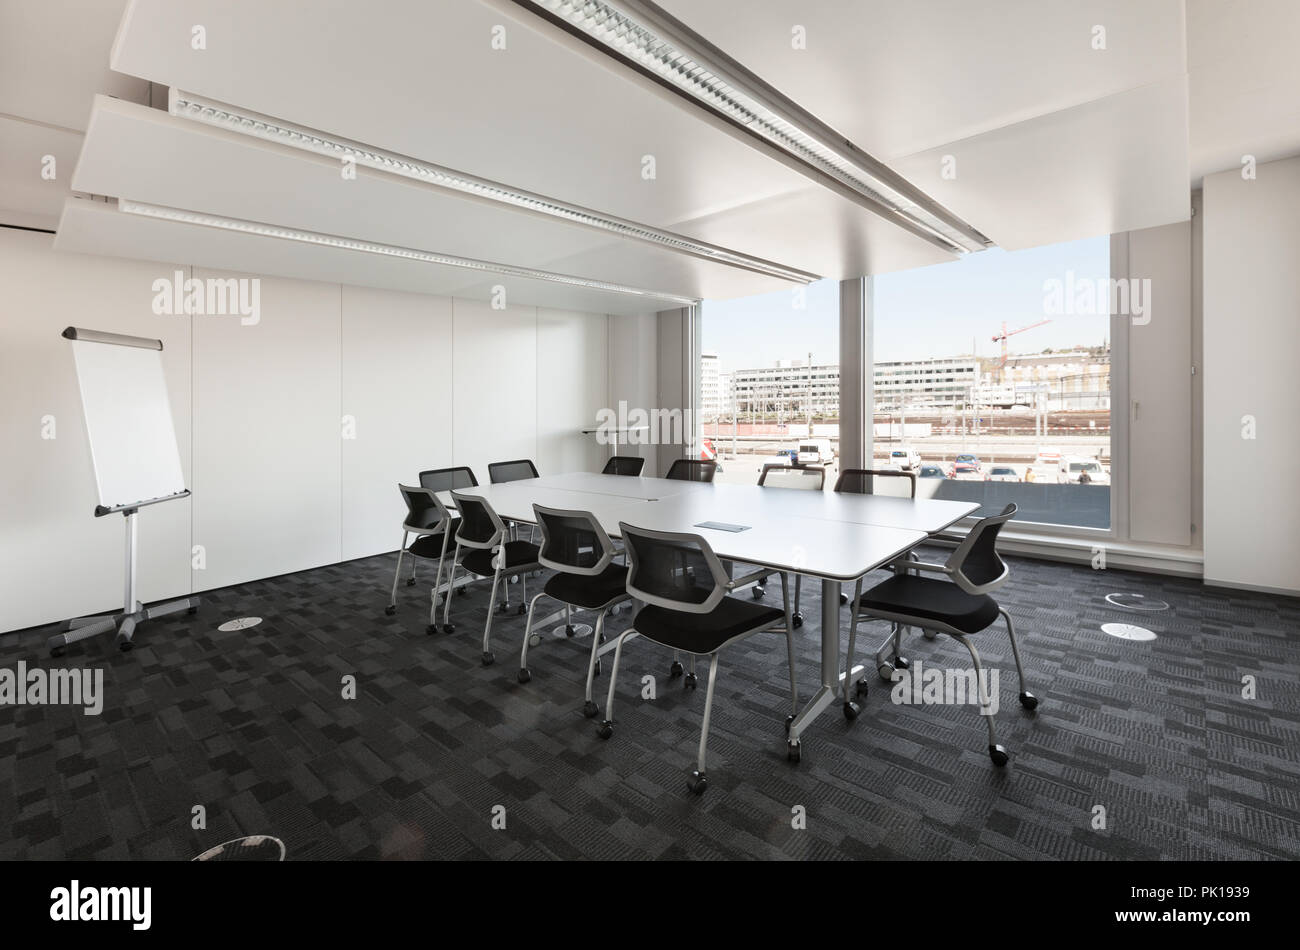 Building, interior, empty meeting room Stock Photo